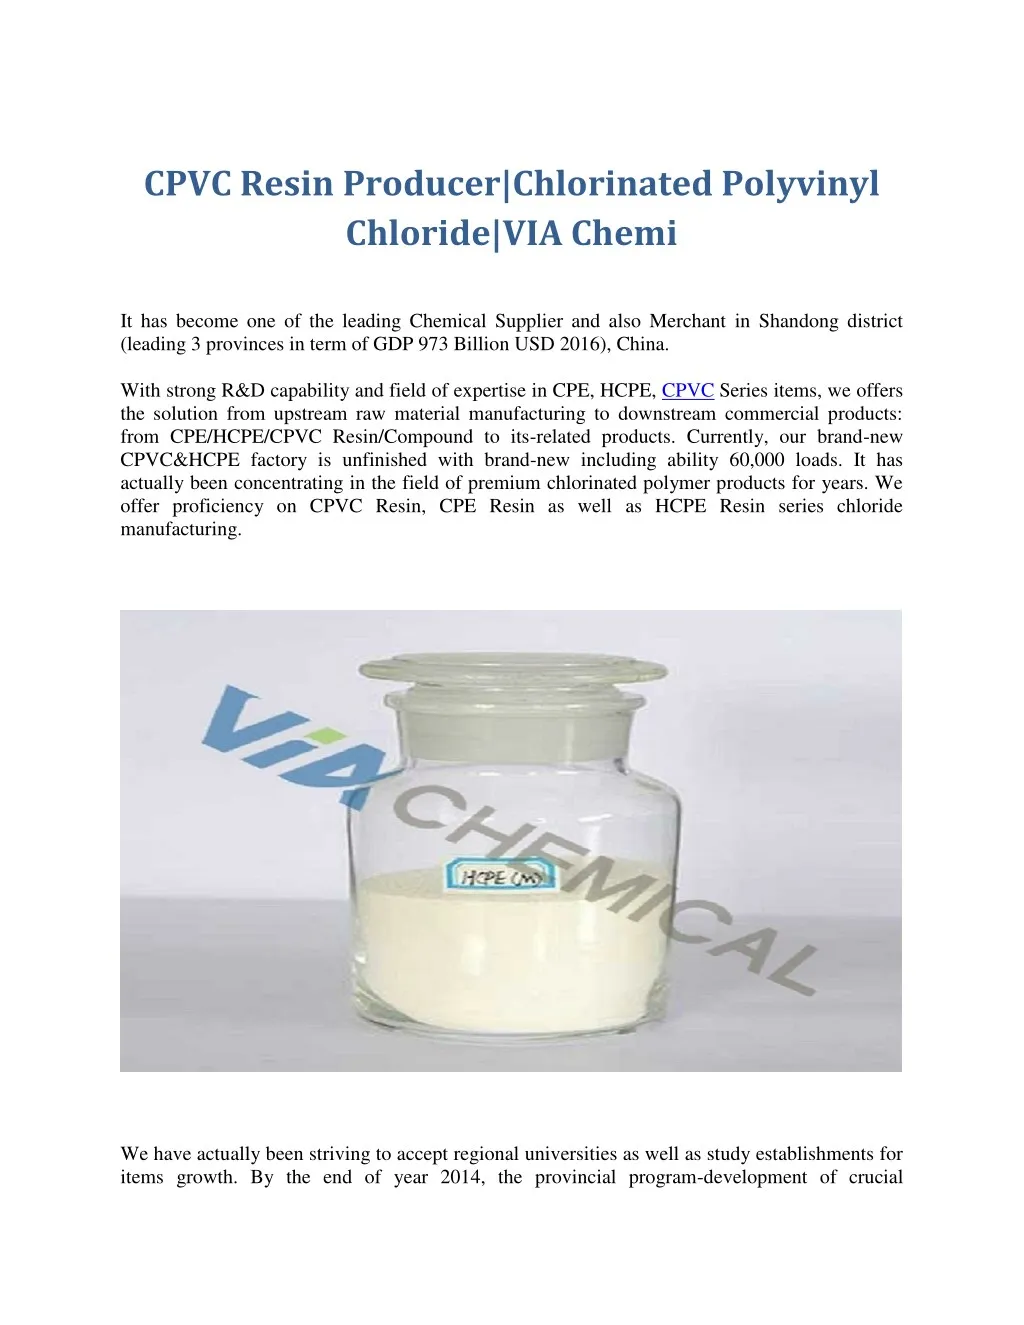 cpvc resin producer chlorinated polyvinyl